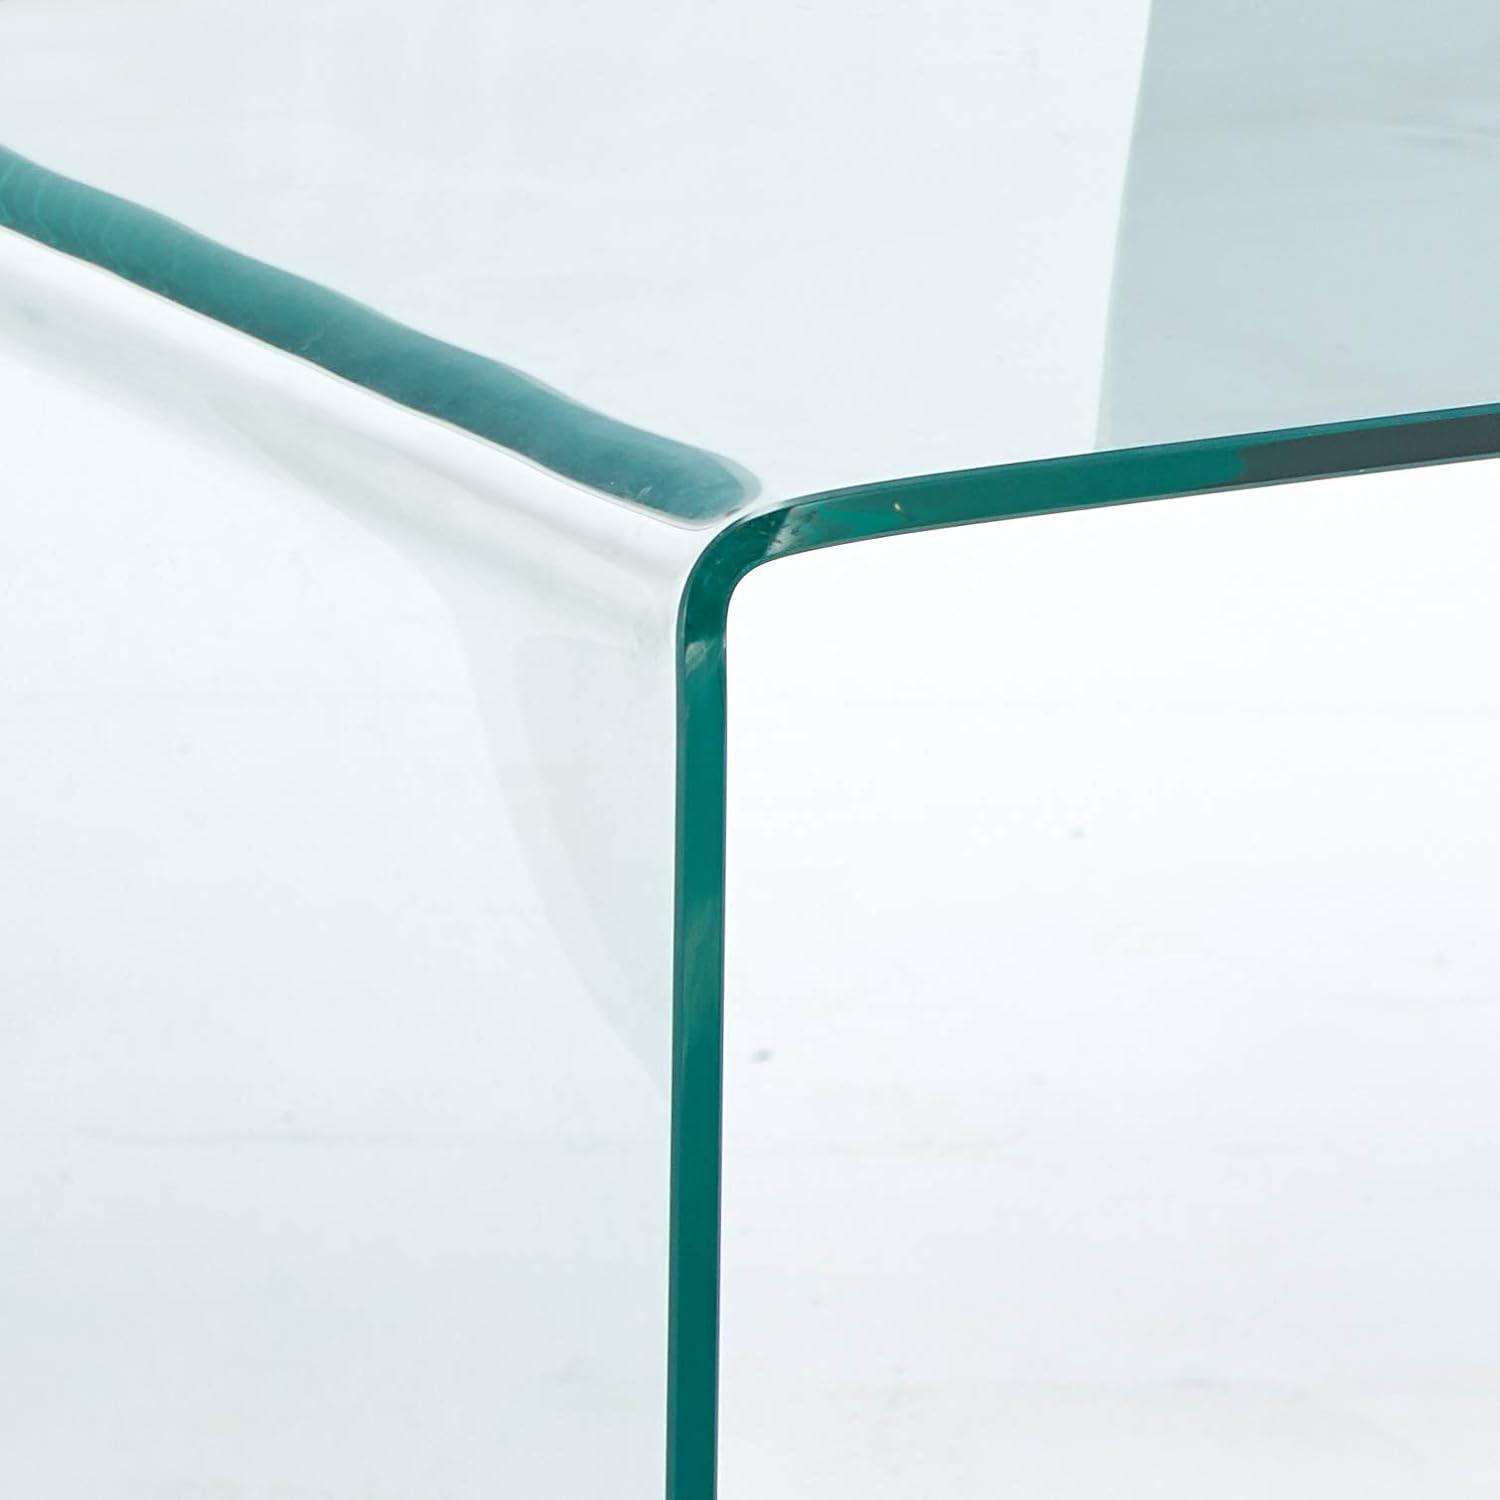 Ripley Transparent Glass 47.25'' Home Office Desk